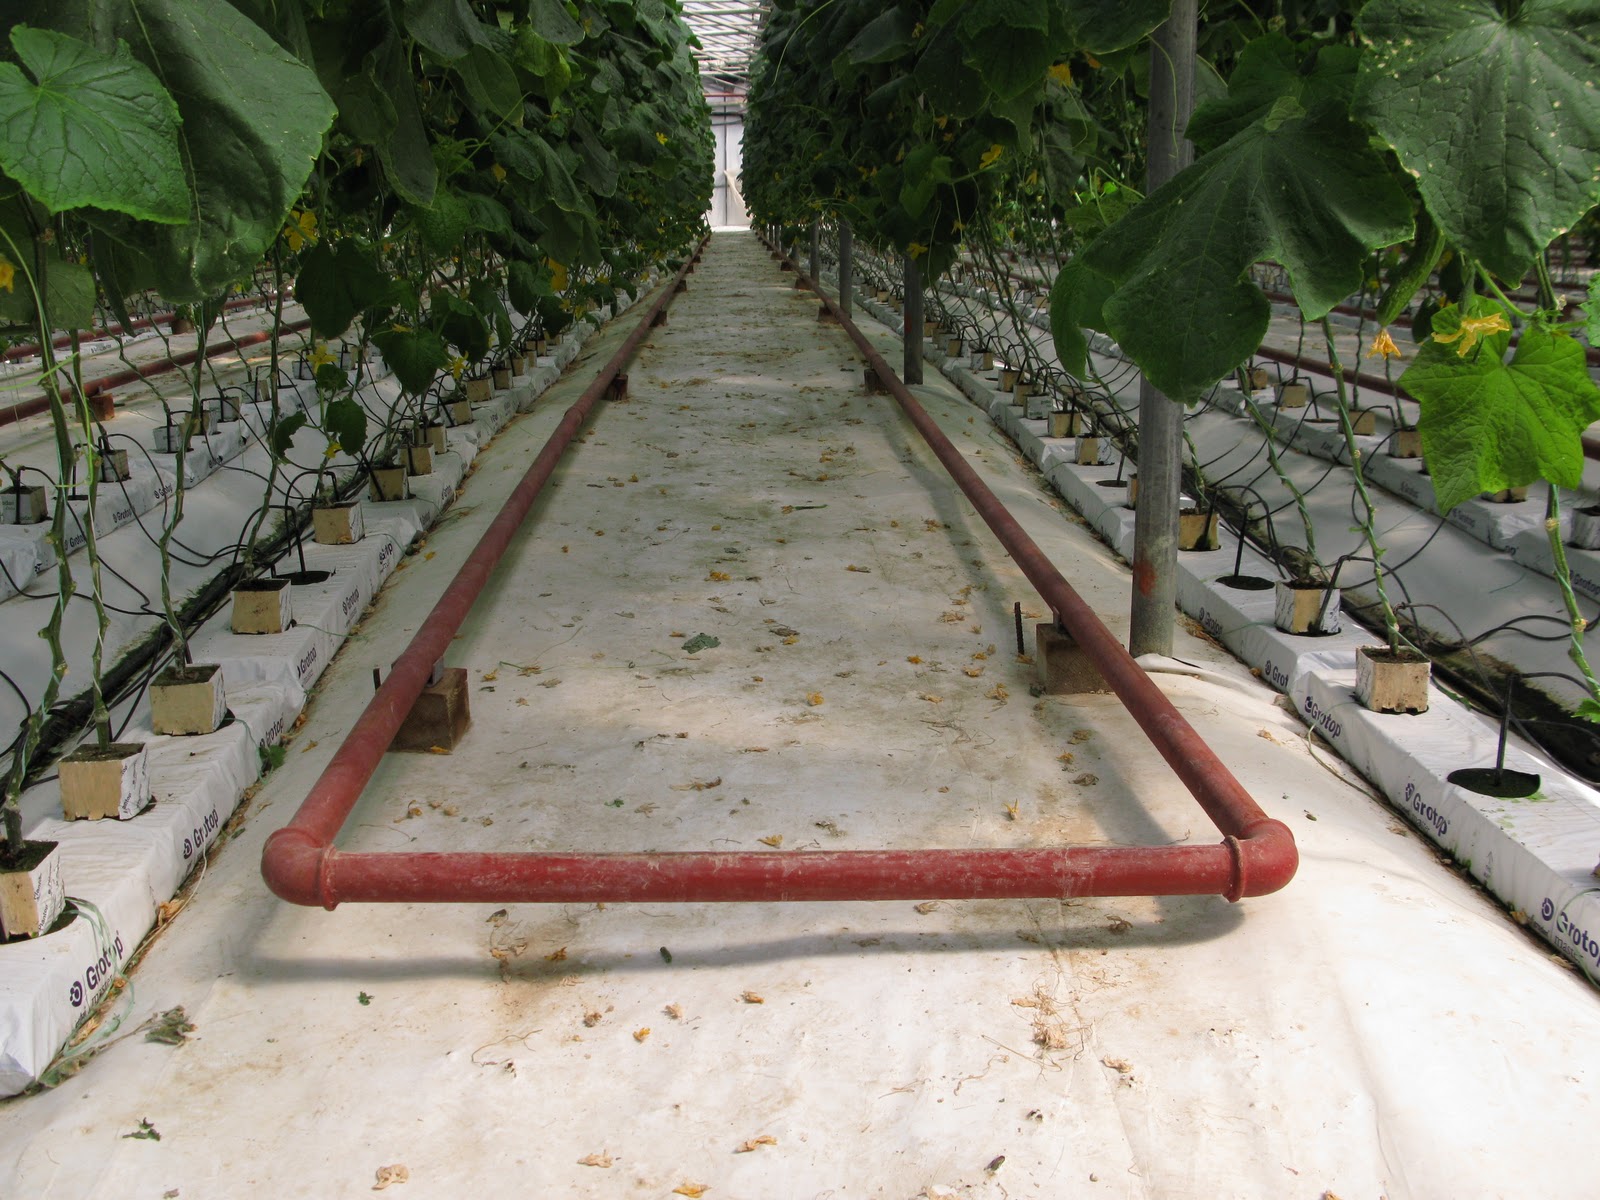 Hydroponic greenhouse systems hydroponics system garden